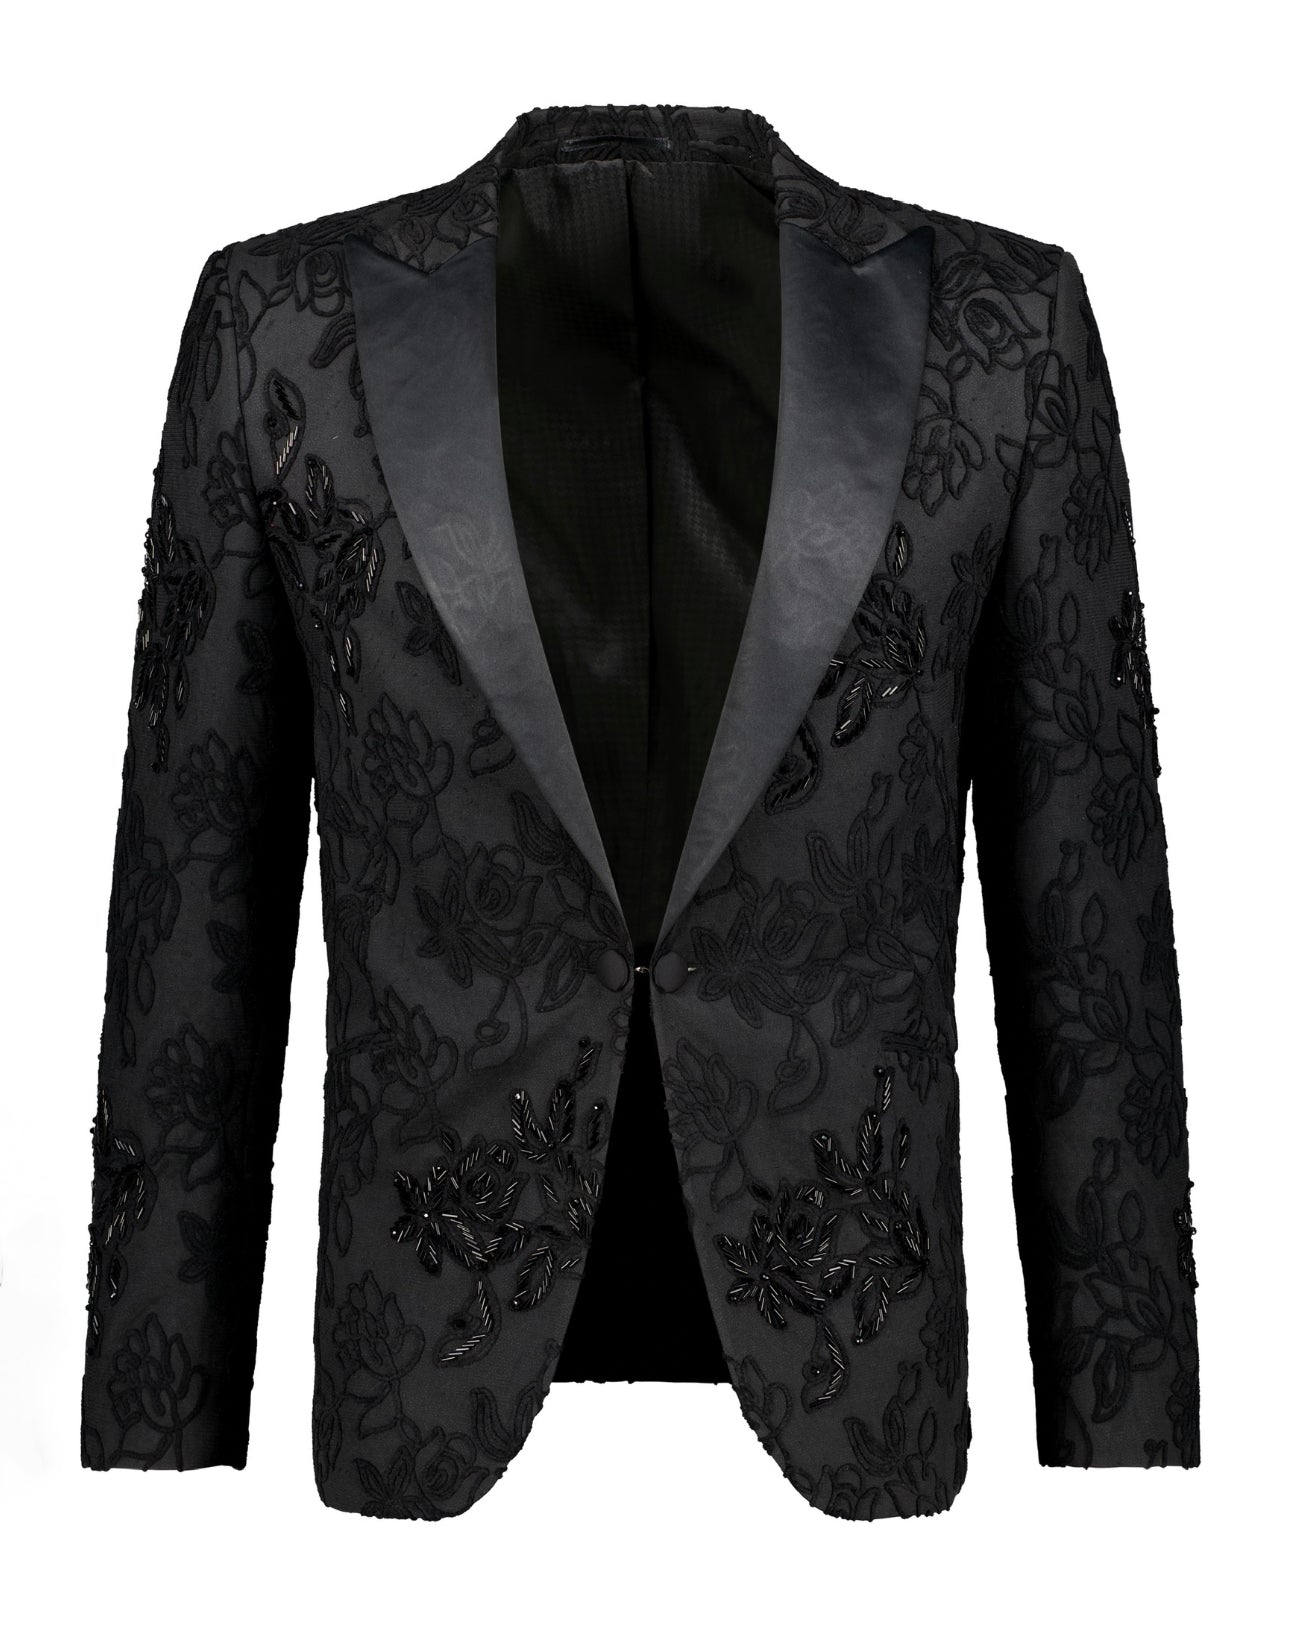 The Eduardo Ceremony Suit - Suit by Urbbana